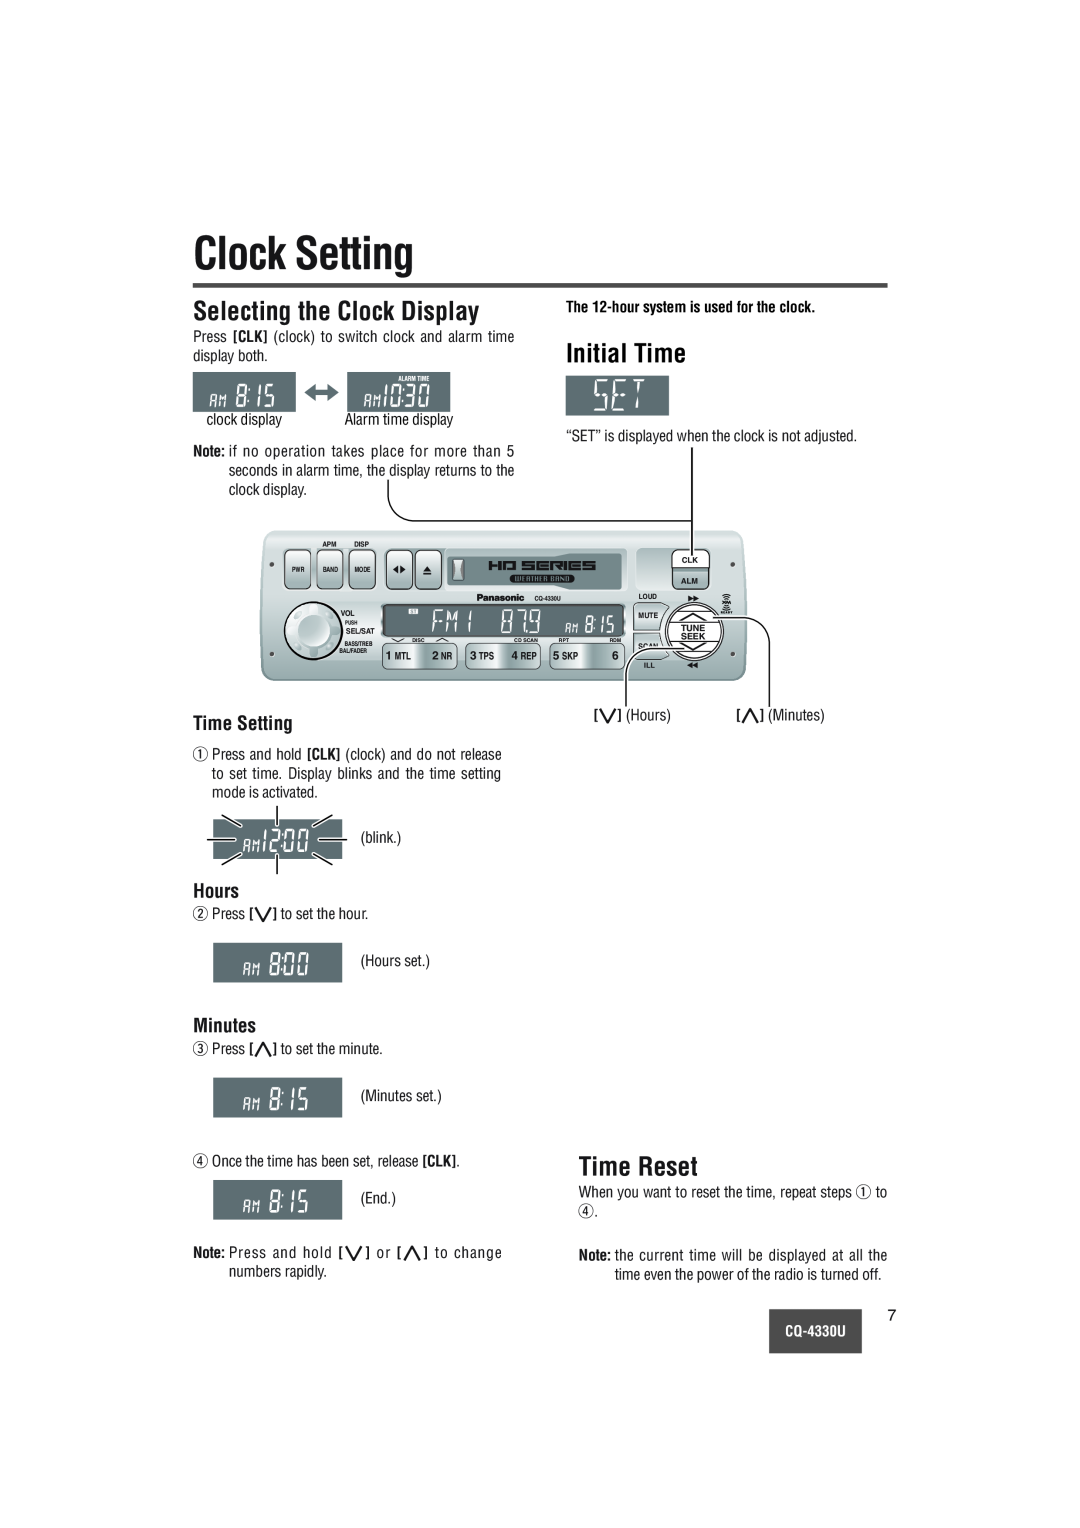 Panasonic CQ-4330U Clock Setting, Selecting the Clock Display, Initial Time, Time Reset, display both, Hours, Minutes 